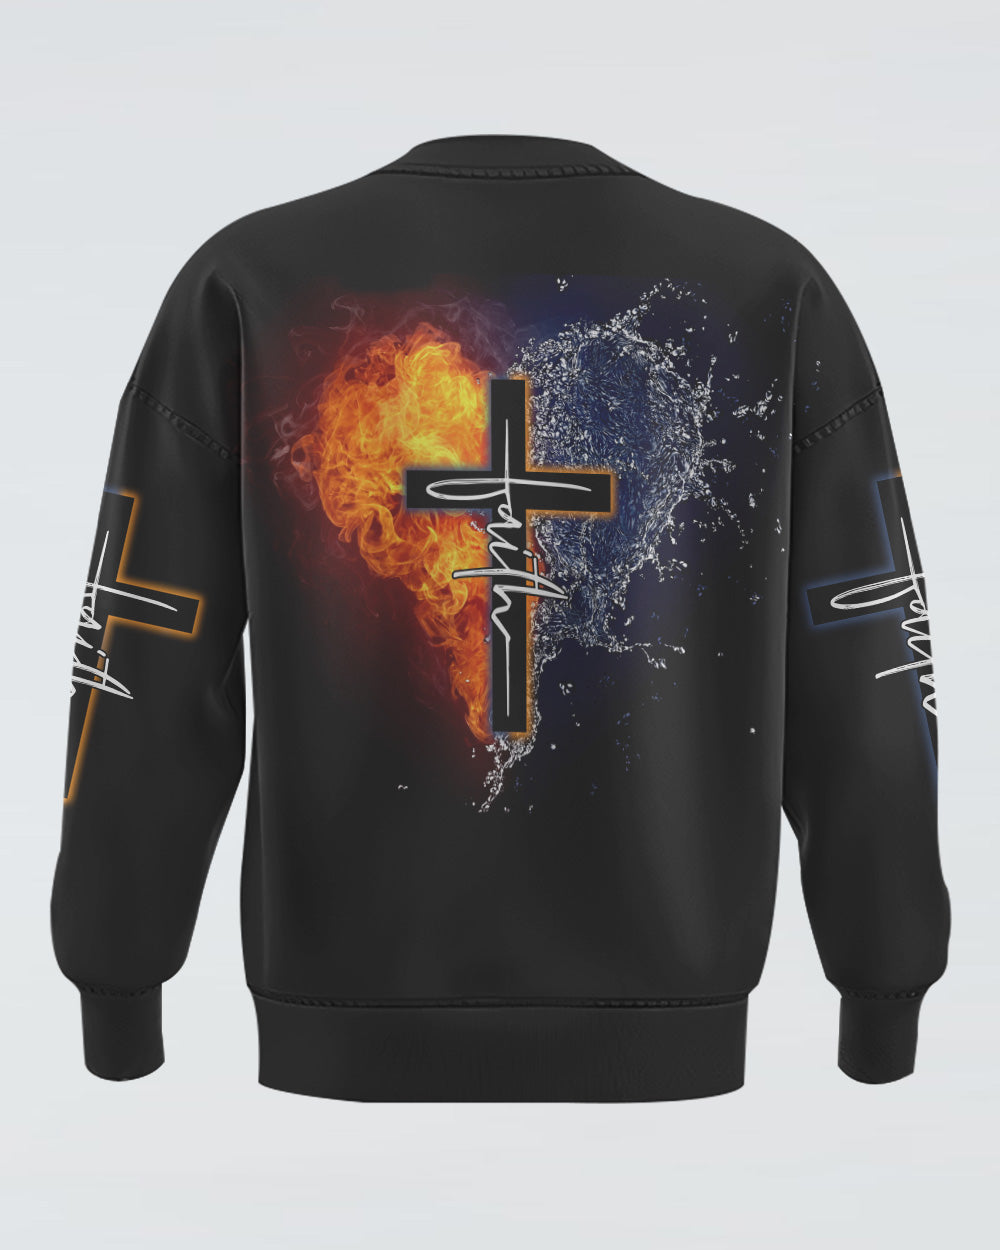 Fire Water Heart Faith Cross Women's Christian Sweatshirt